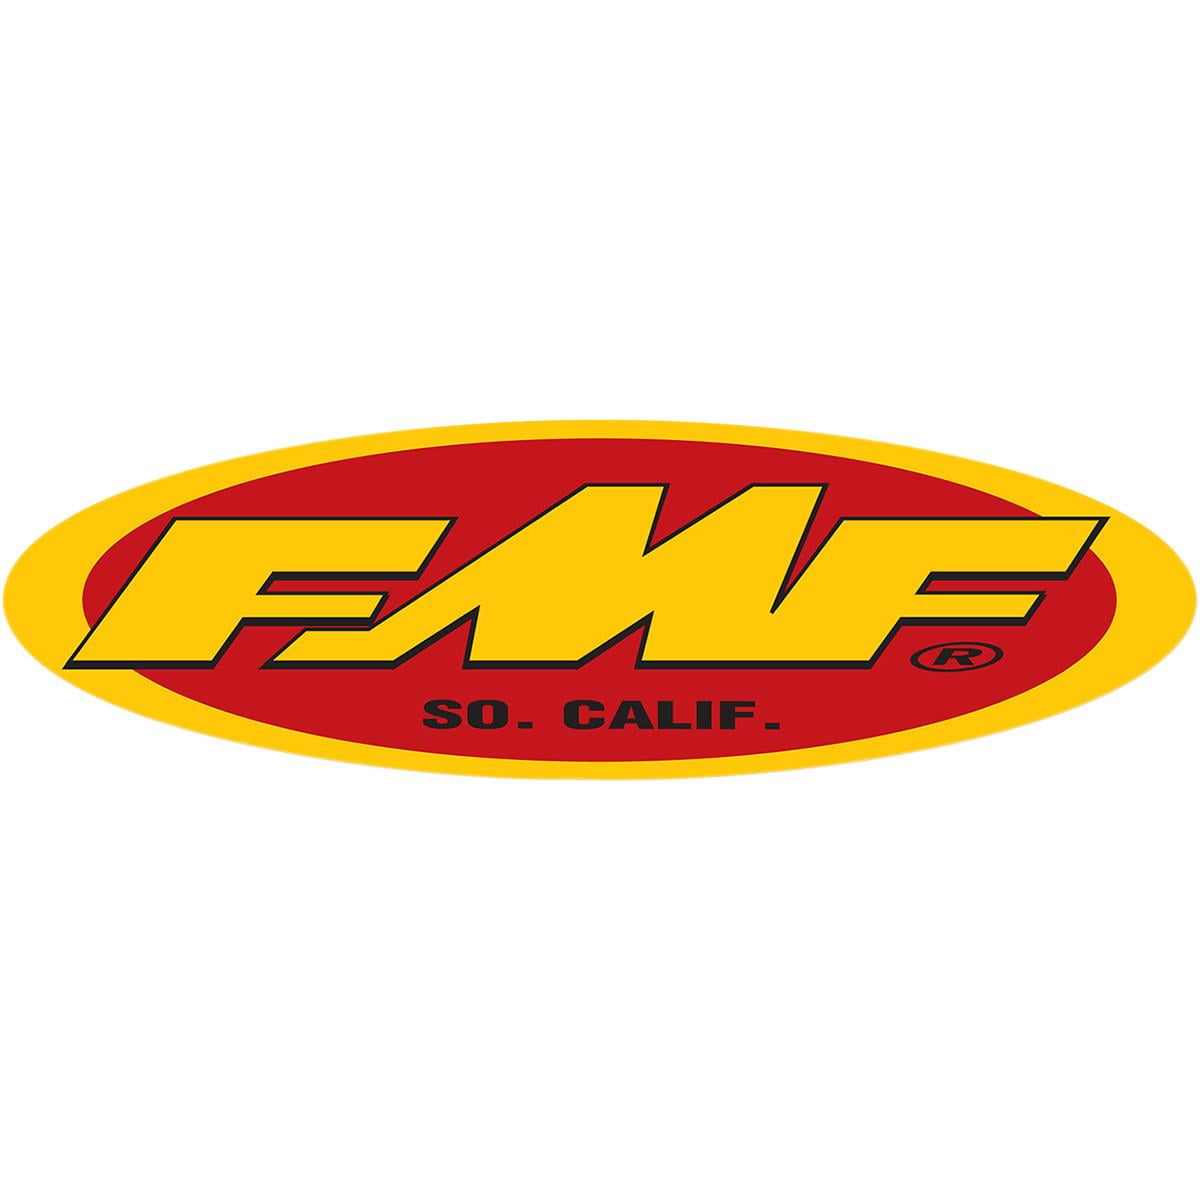 Fmf decal pegatinas logotipo Powercore 4 Wrap vinilo 